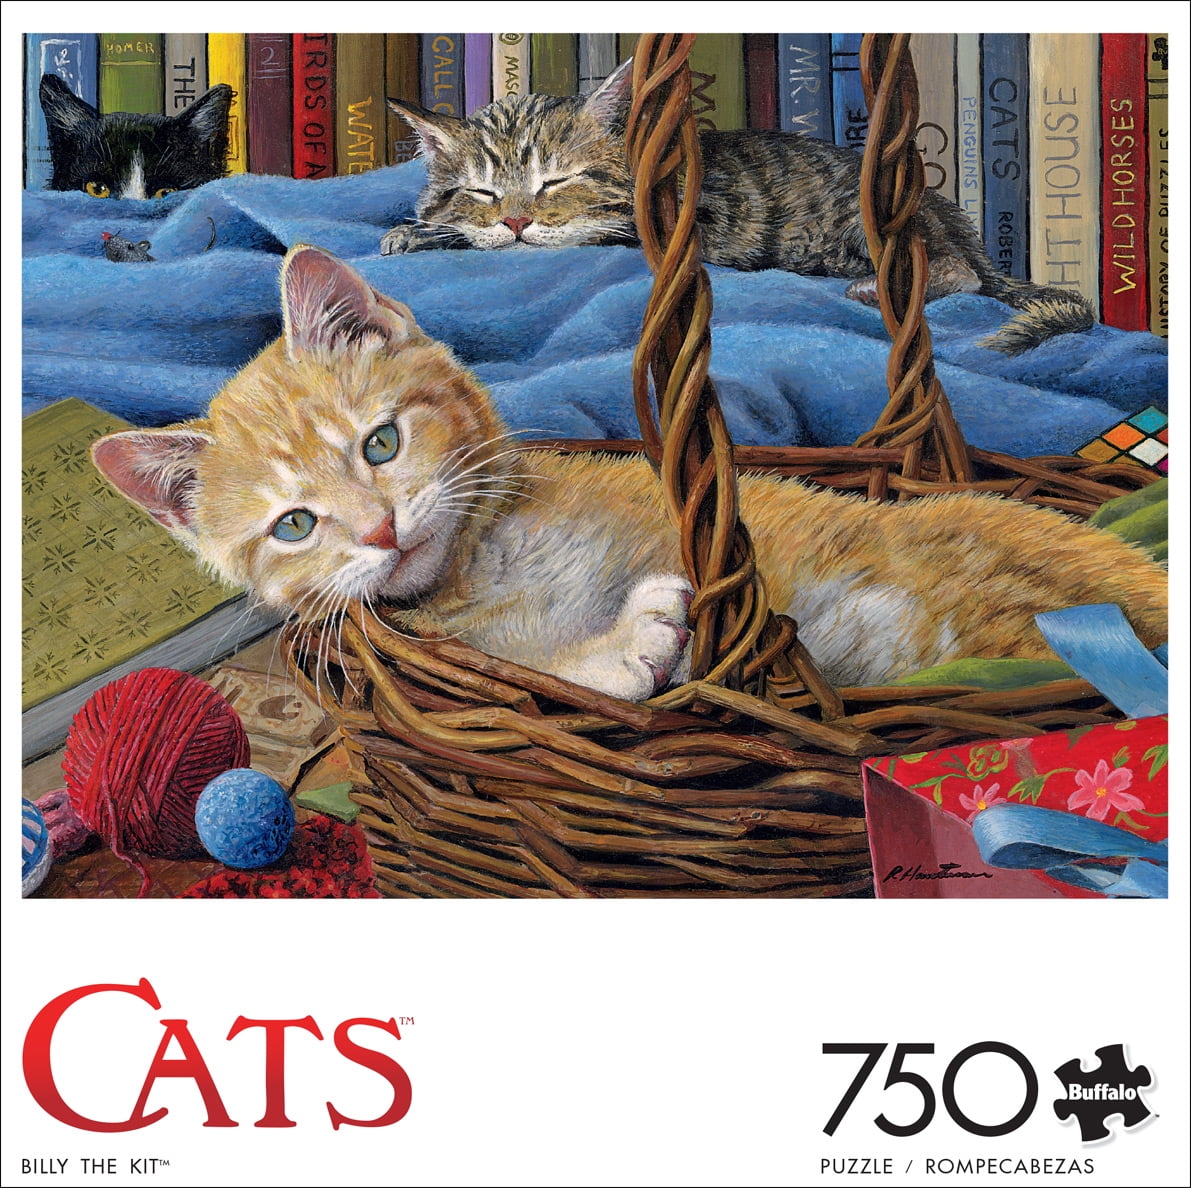 Cats Puzzle Beachcombers 750 Pcs Jigsaw Buffalo Games Suntan 24x18 for sale online 